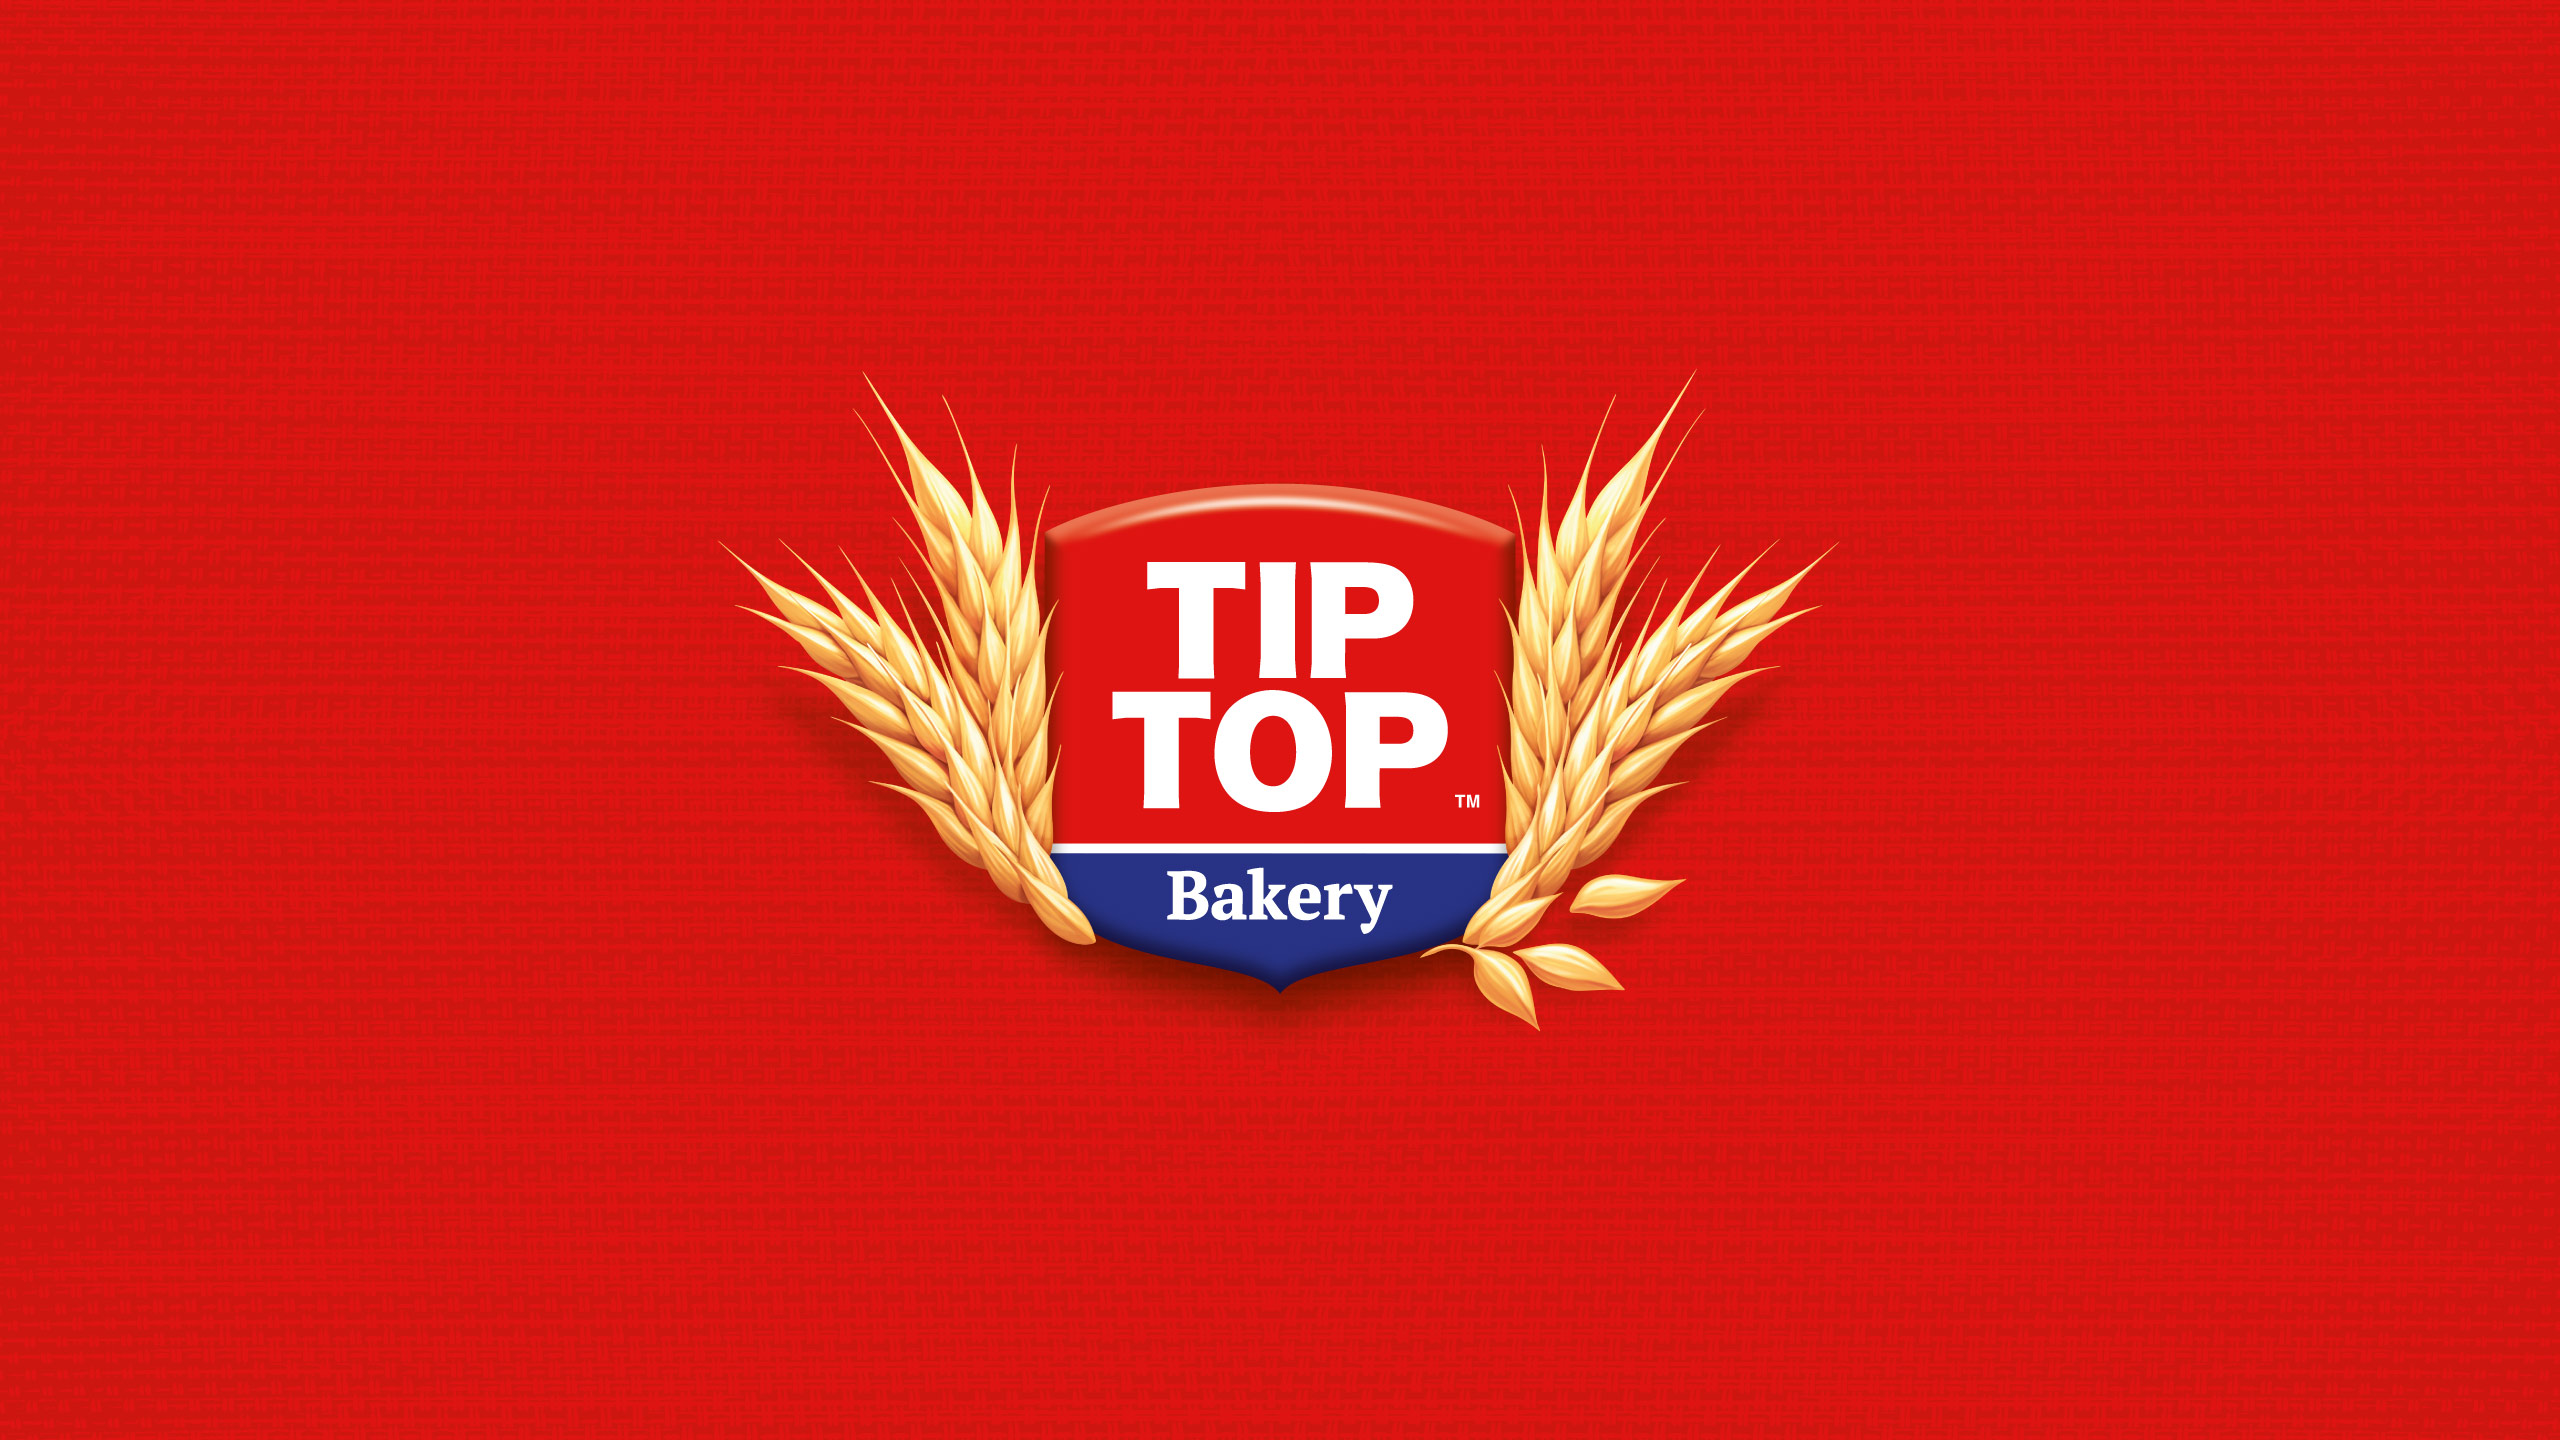 Tip Top Bakery